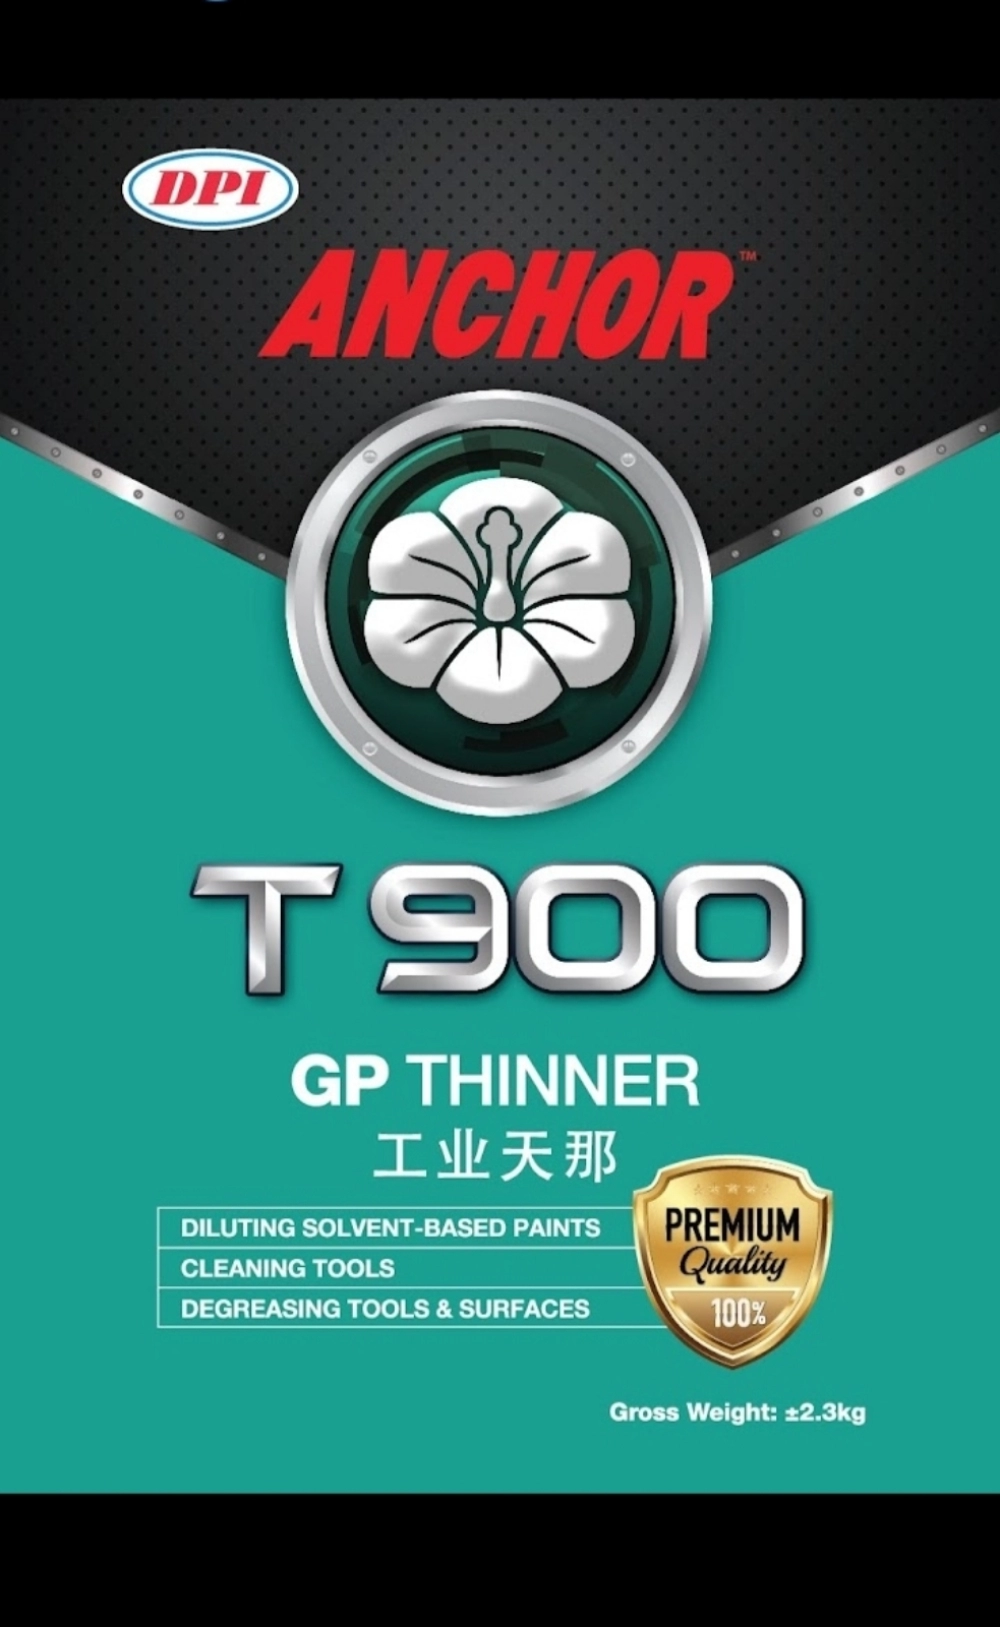 Anchor T900 GP Thinner